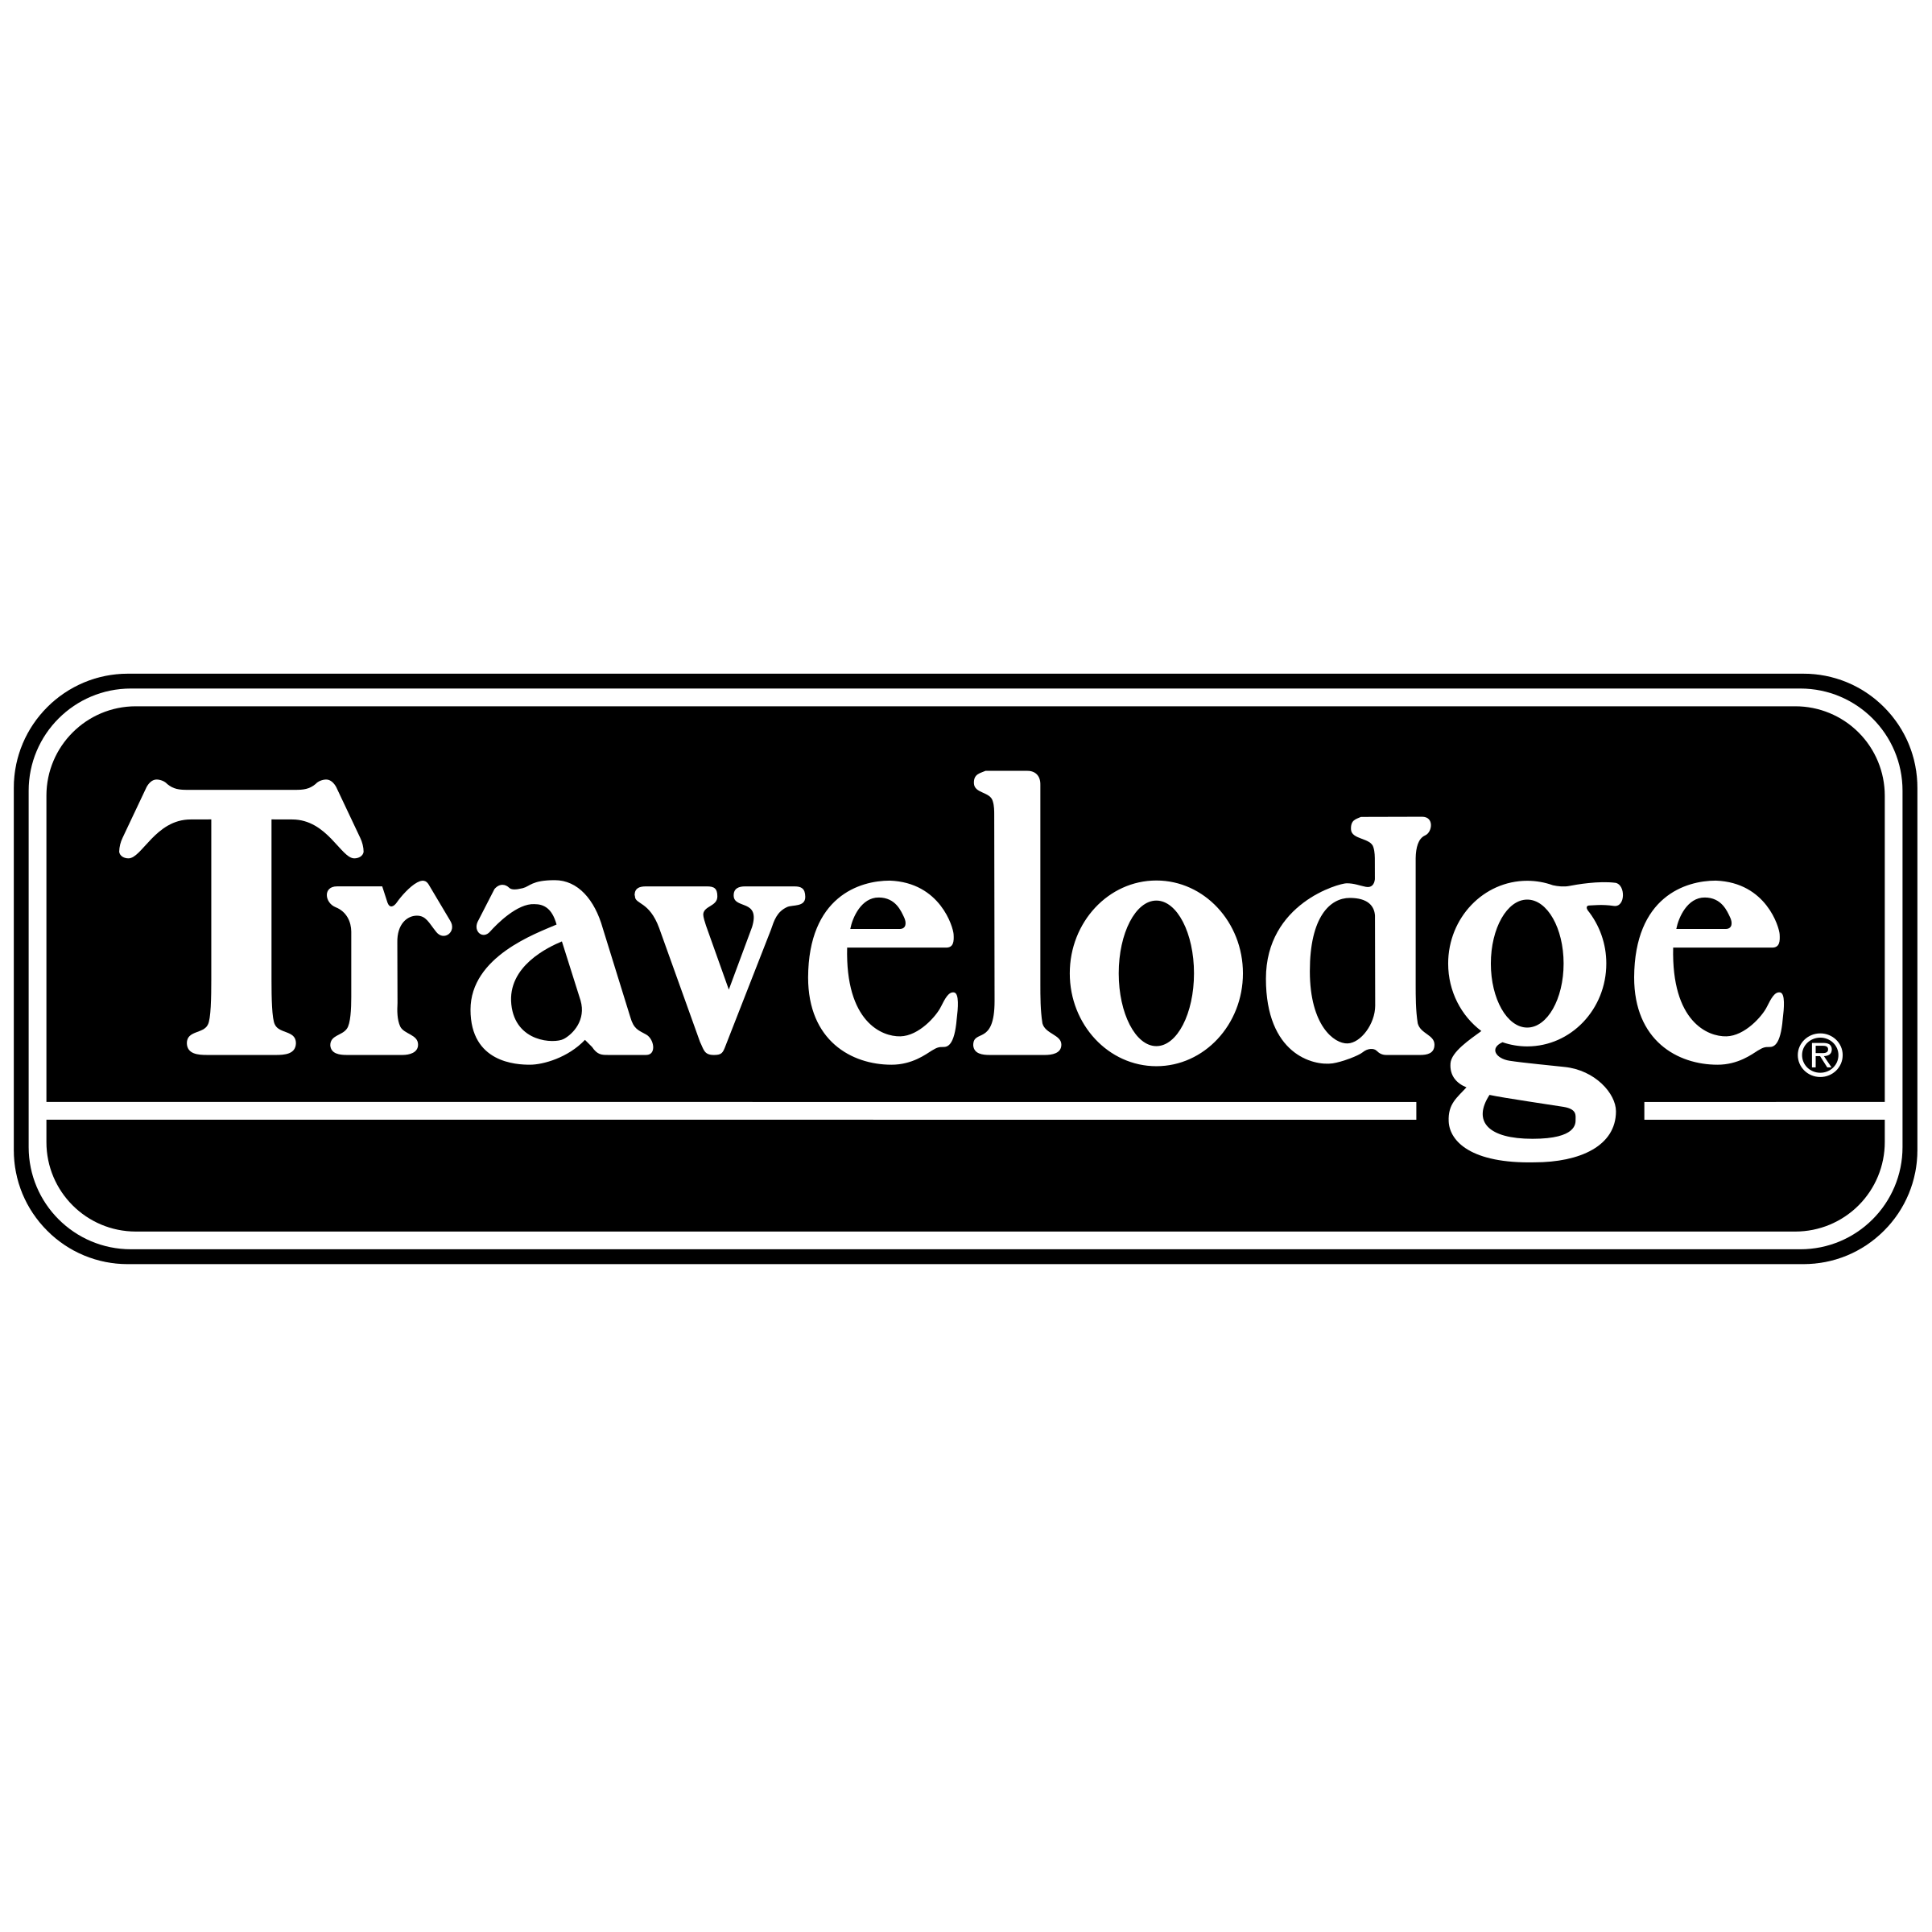 Travelodge Logo - Travelodge Logo PNG Transparent & SVG Vector - Freebie Supply